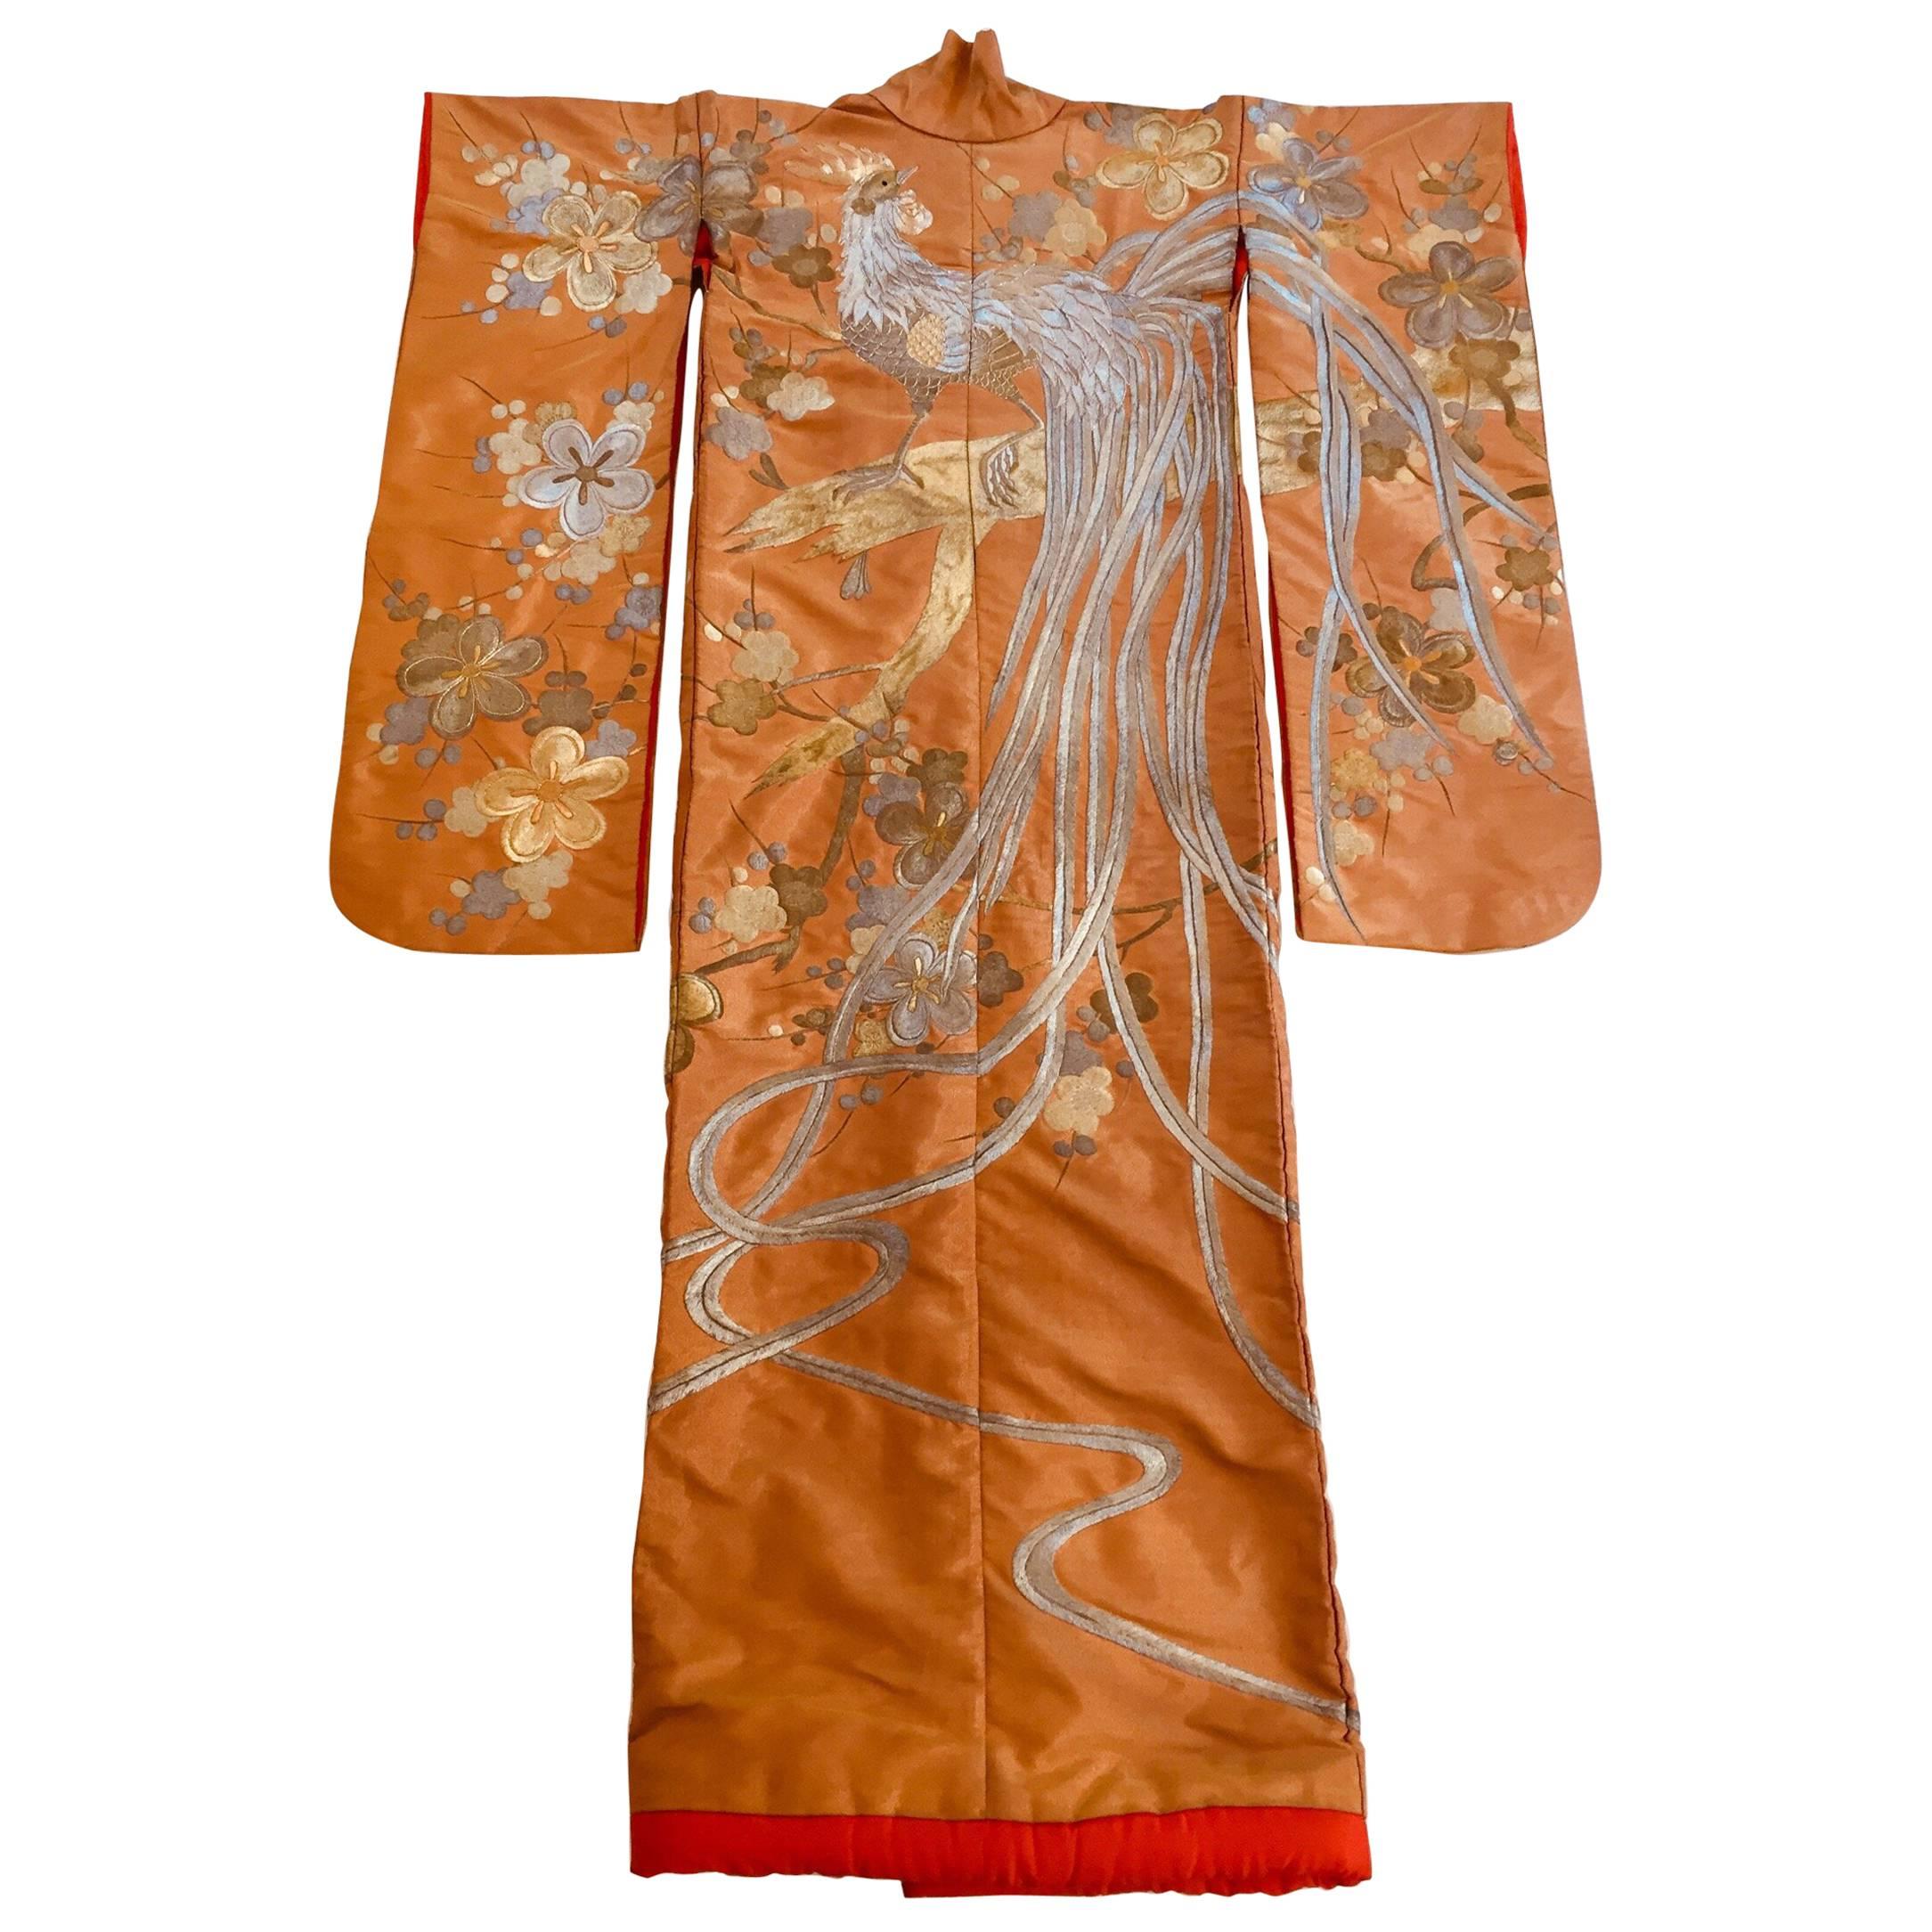 Vintage Brocade Japanese Ceremonial Kimono in Orange, Gold and Silver